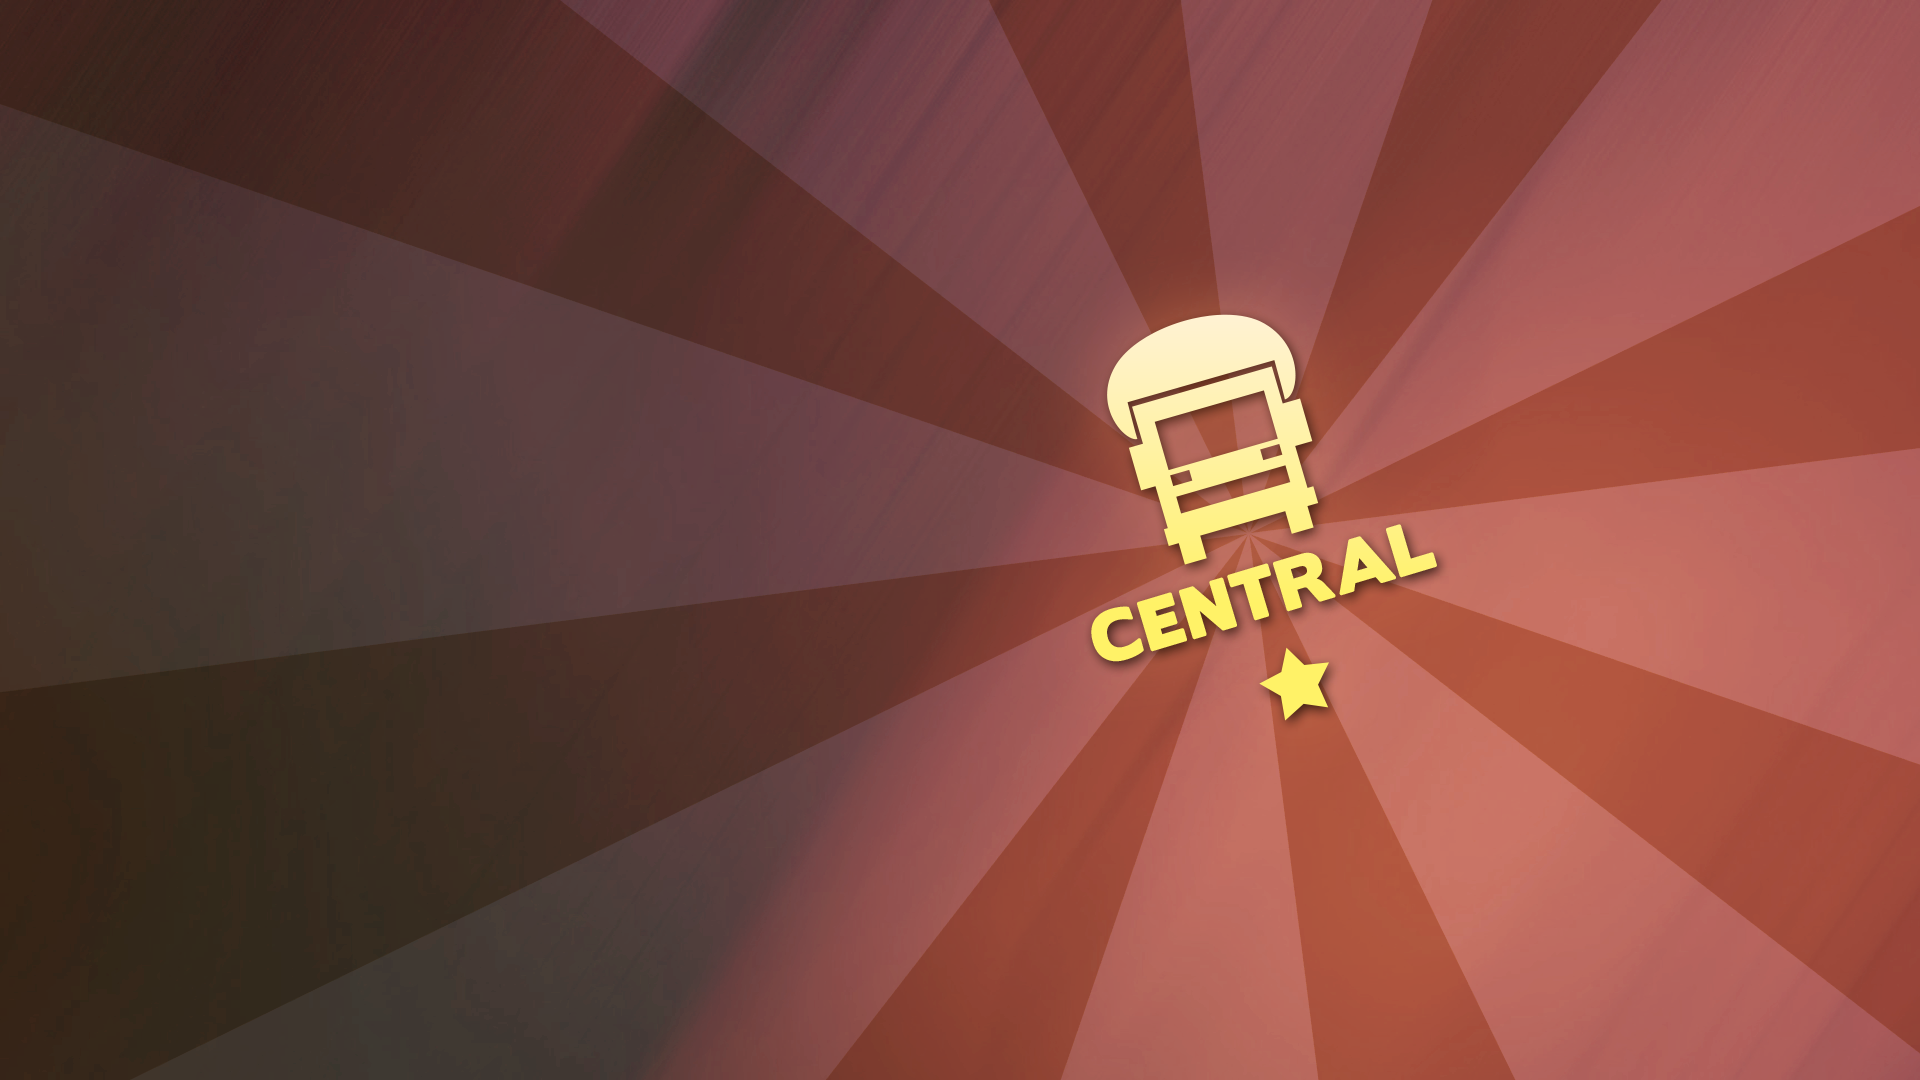 Icon for Tank truck insignia 'Central'